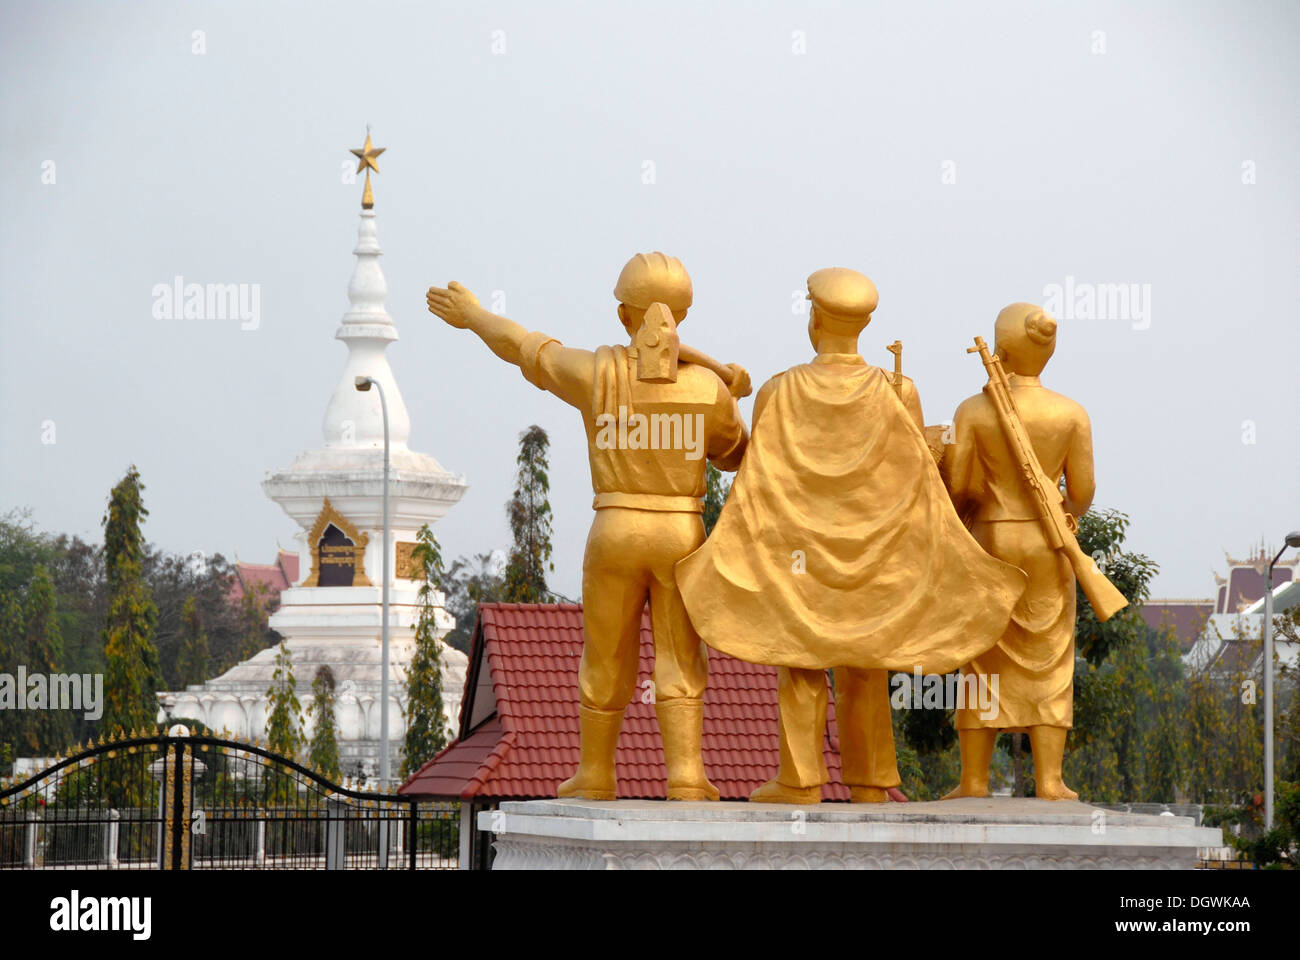 Vietnam War, golden communist warrior statues, Laotian Army Museum, memorial stupa with star, Vientiane, Laos, Southeast Asia Stock Photo